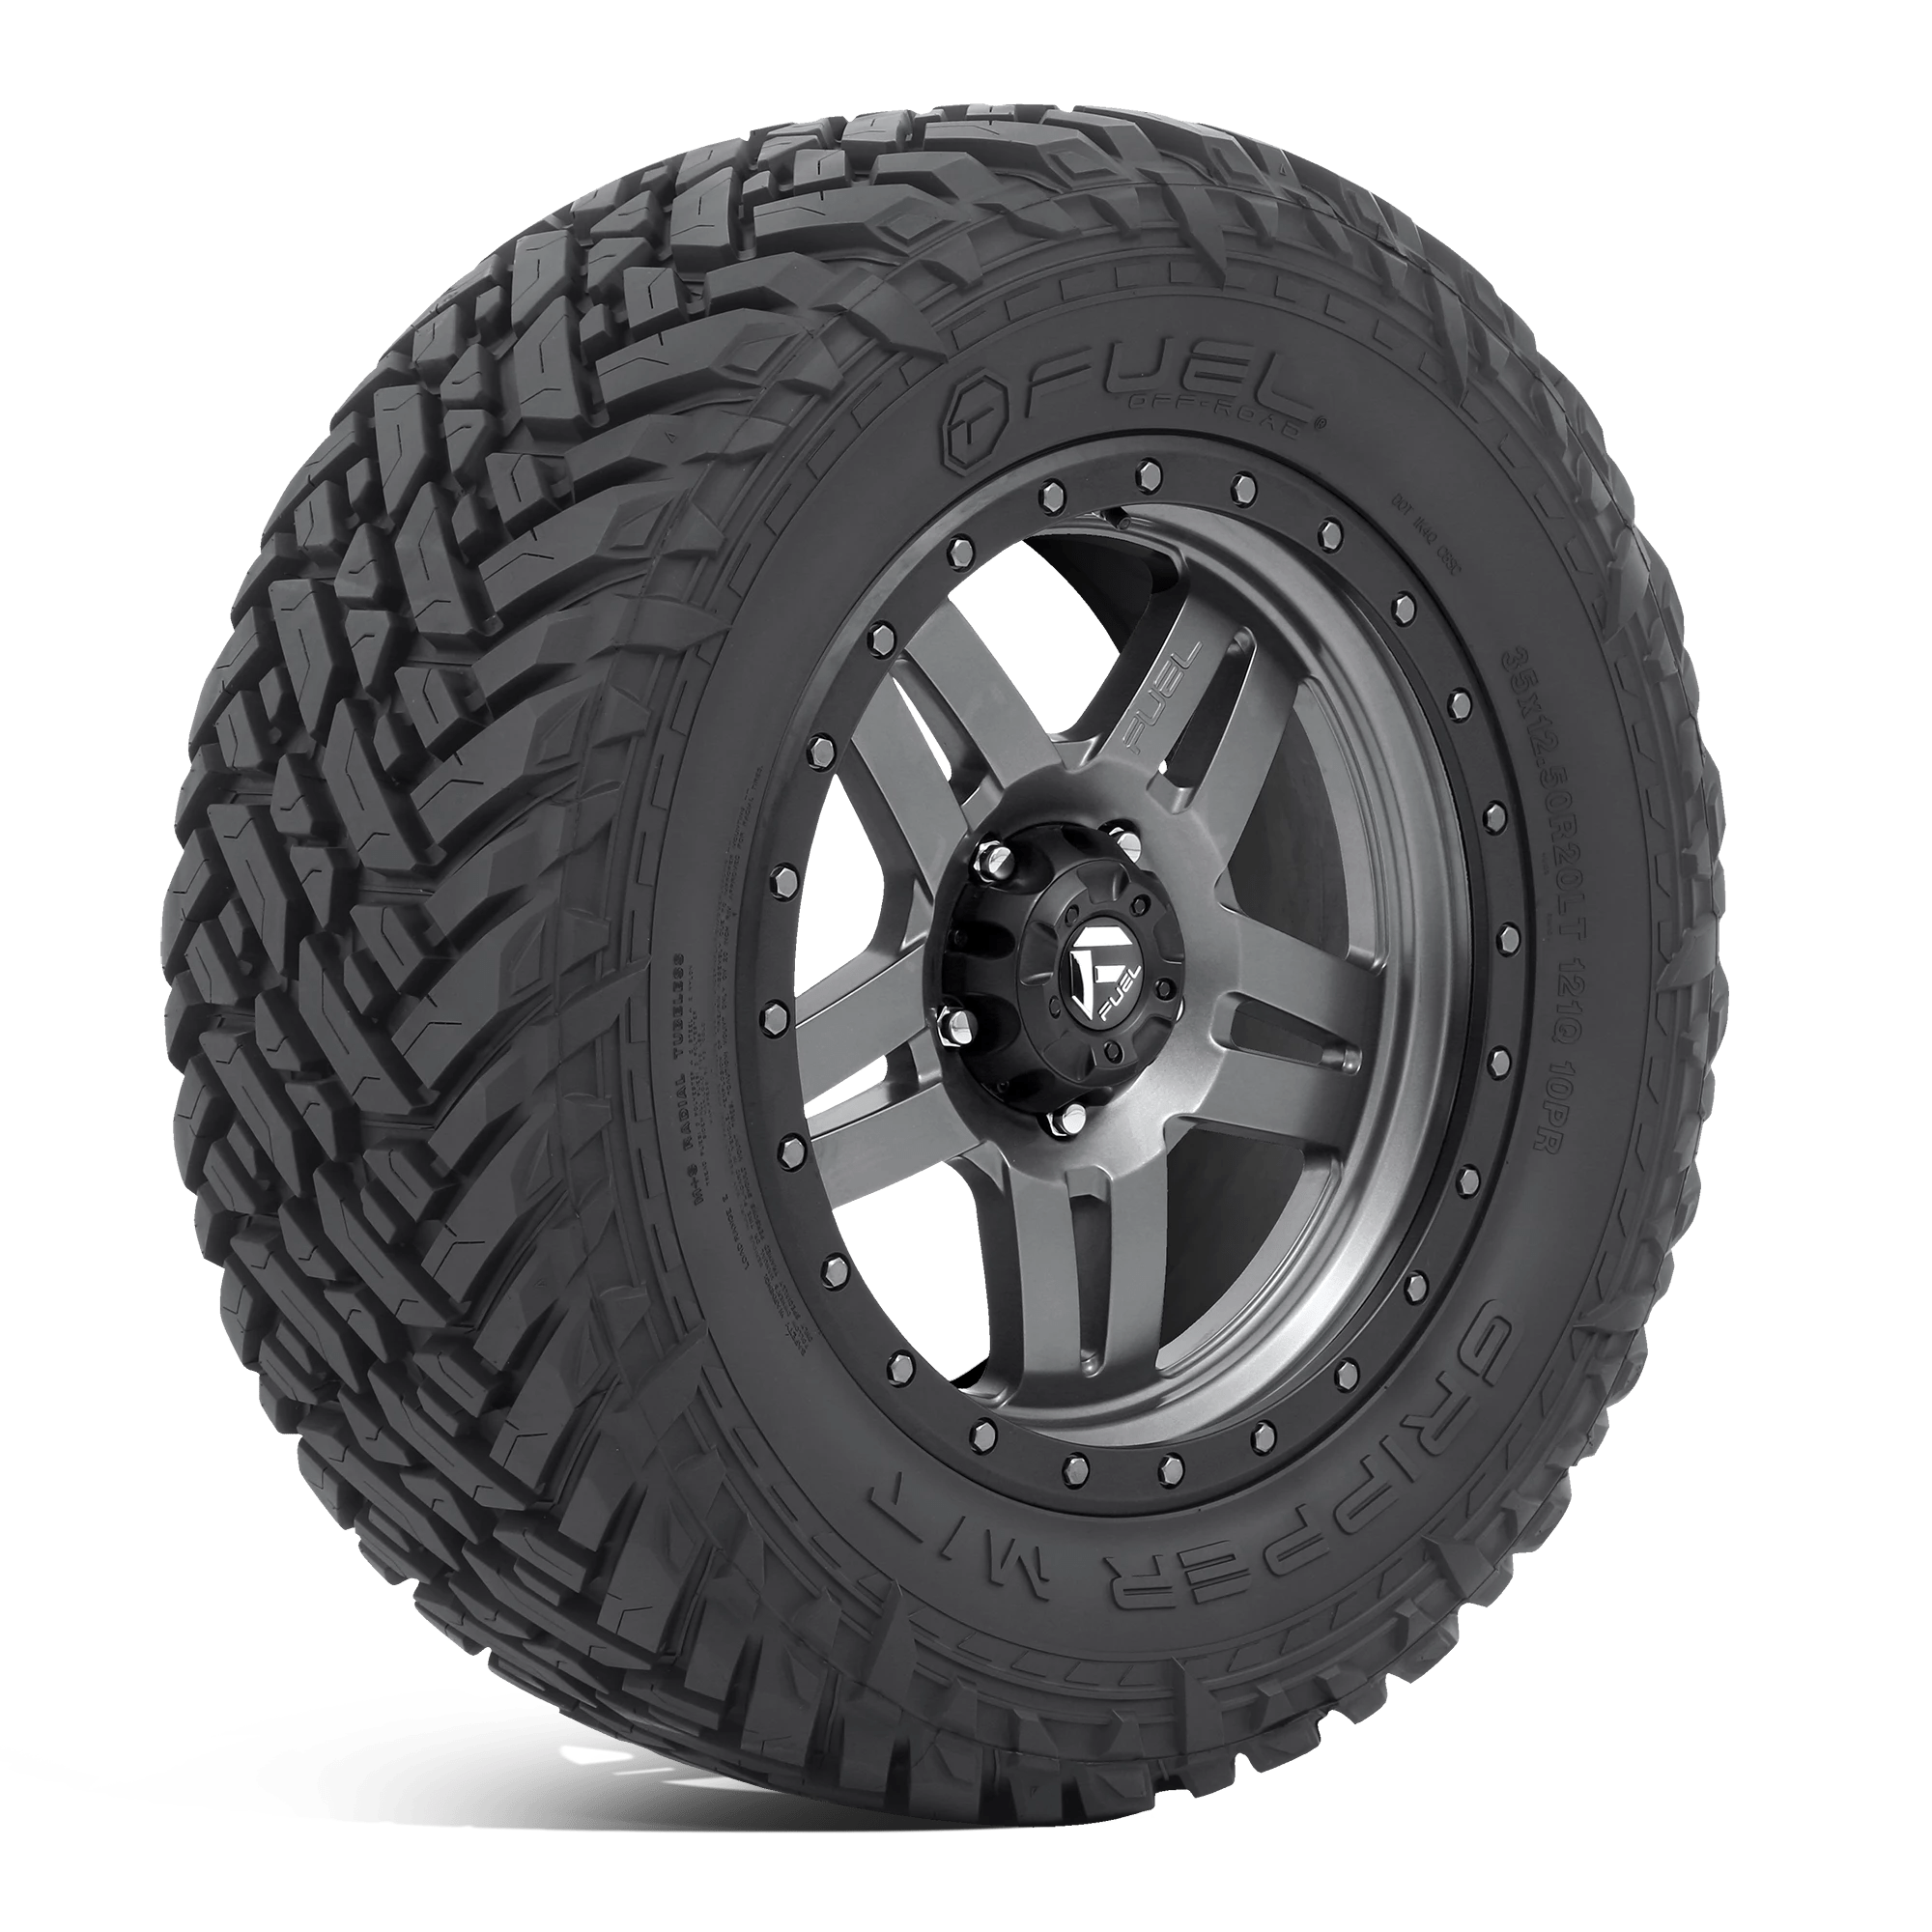 FUEL MUD GRIPPER 40X16.50R28LT Tires